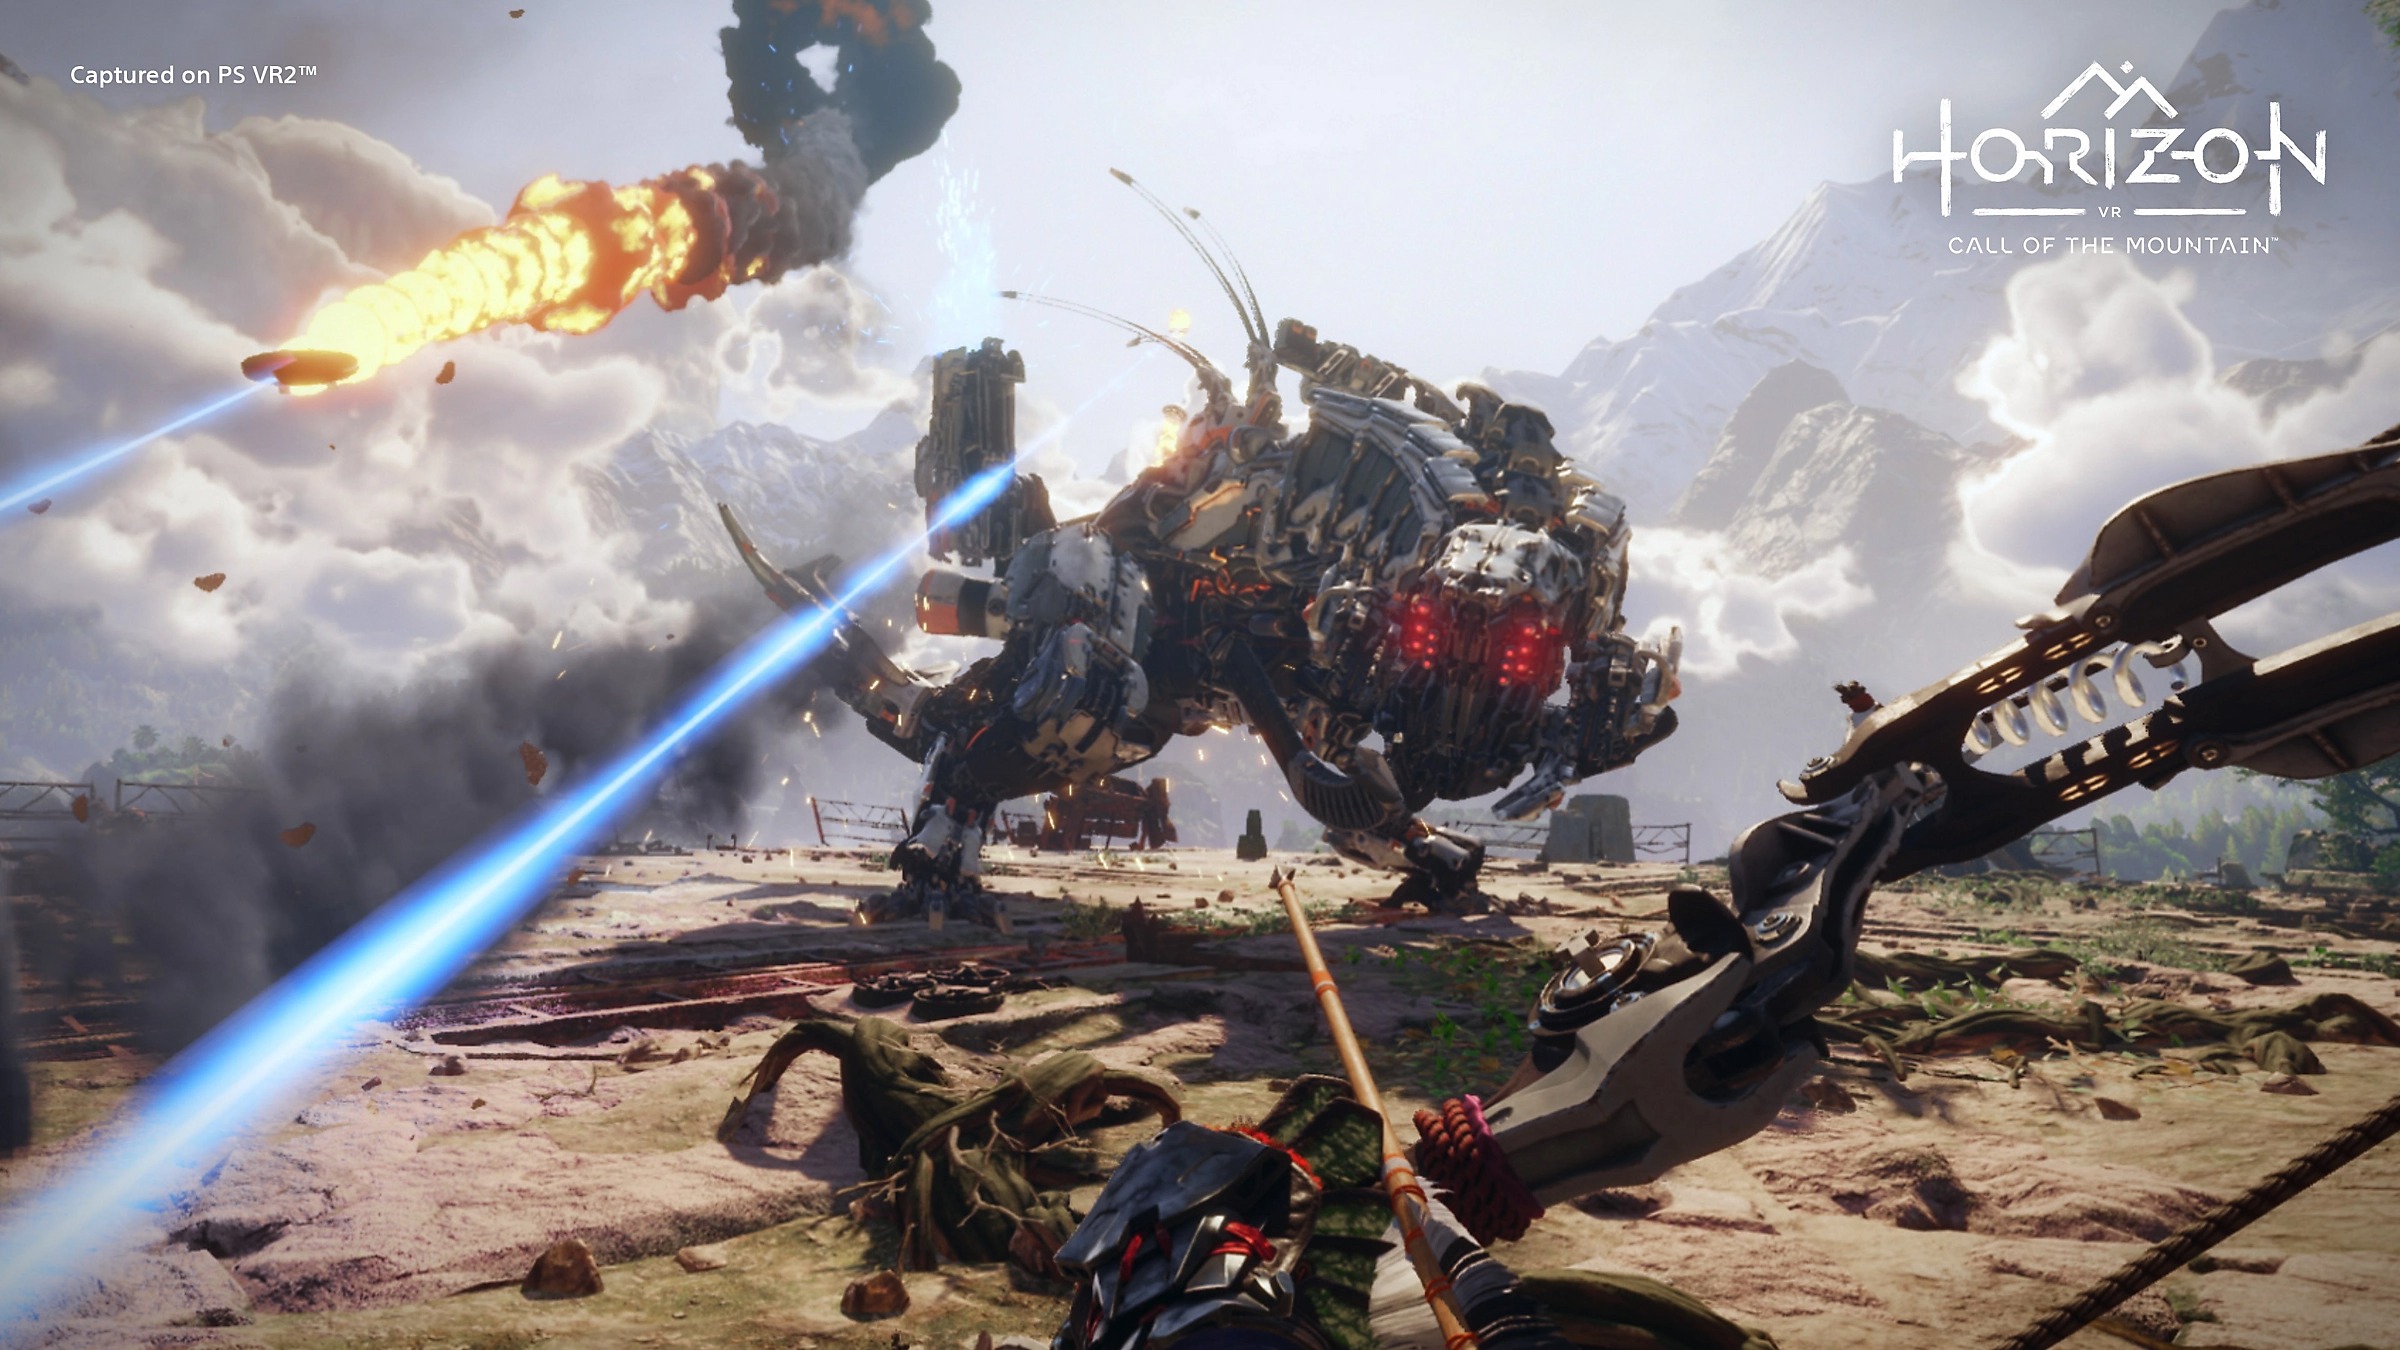 Horizon: Call of the Mountain PSVR 2 Gameplay Revealed